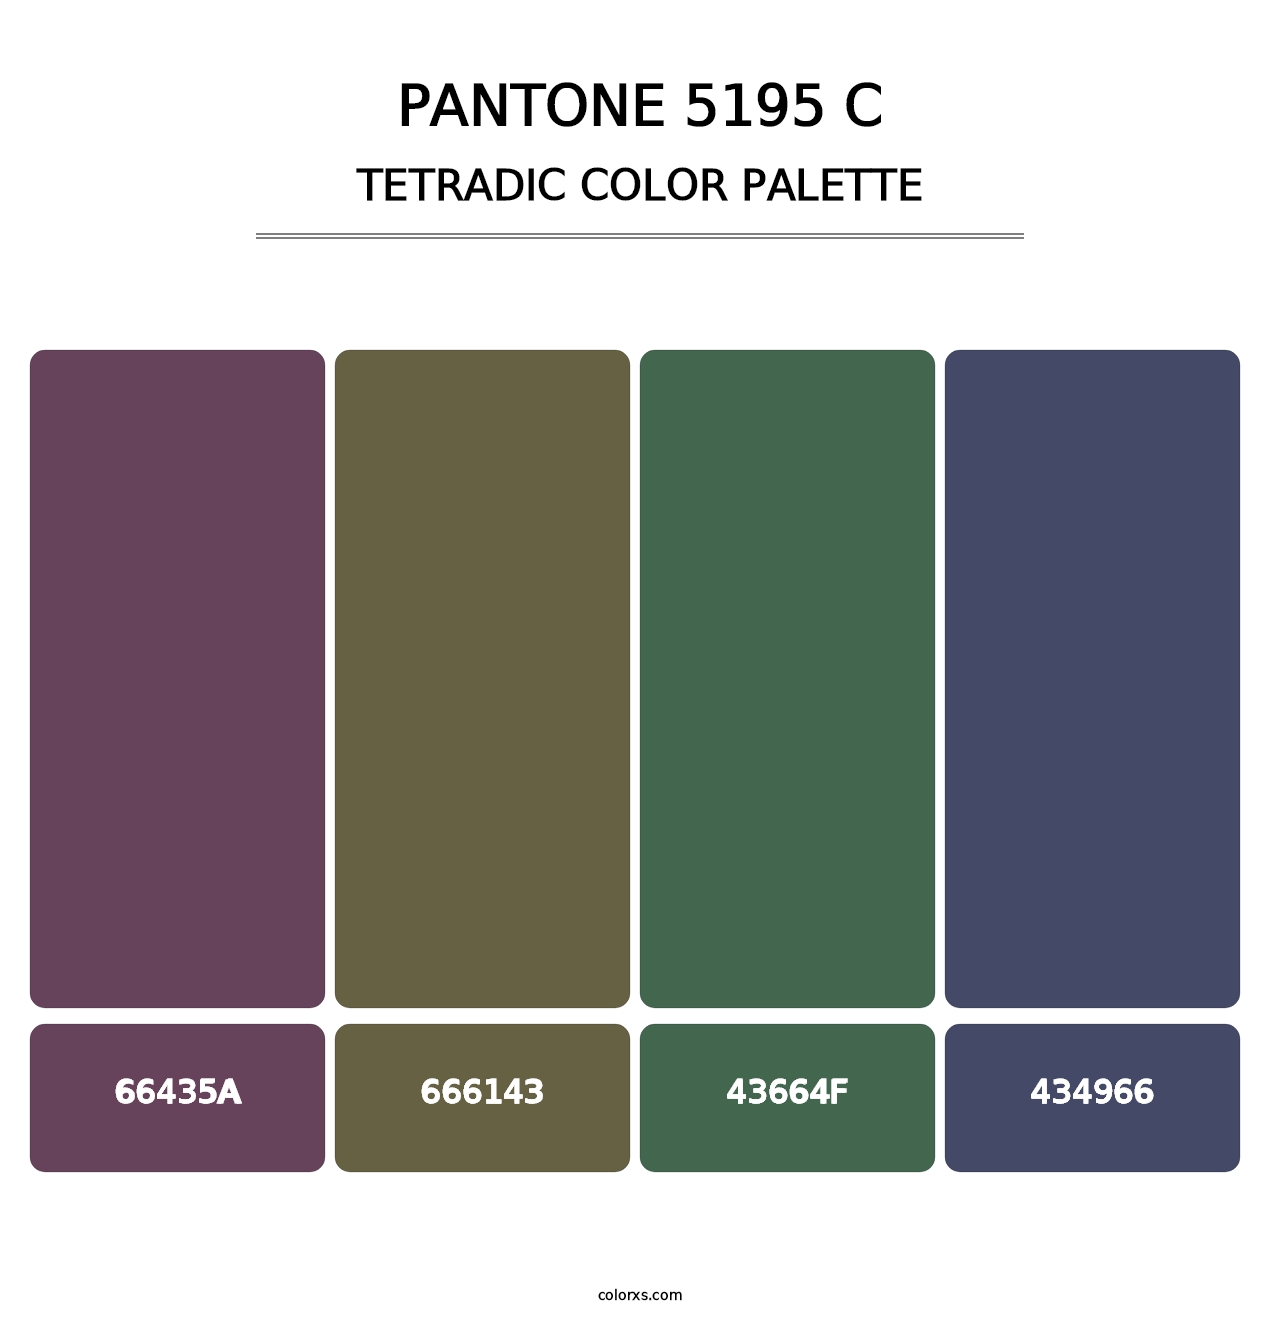 PANTONE 5195 C - Tetradic Color Palette